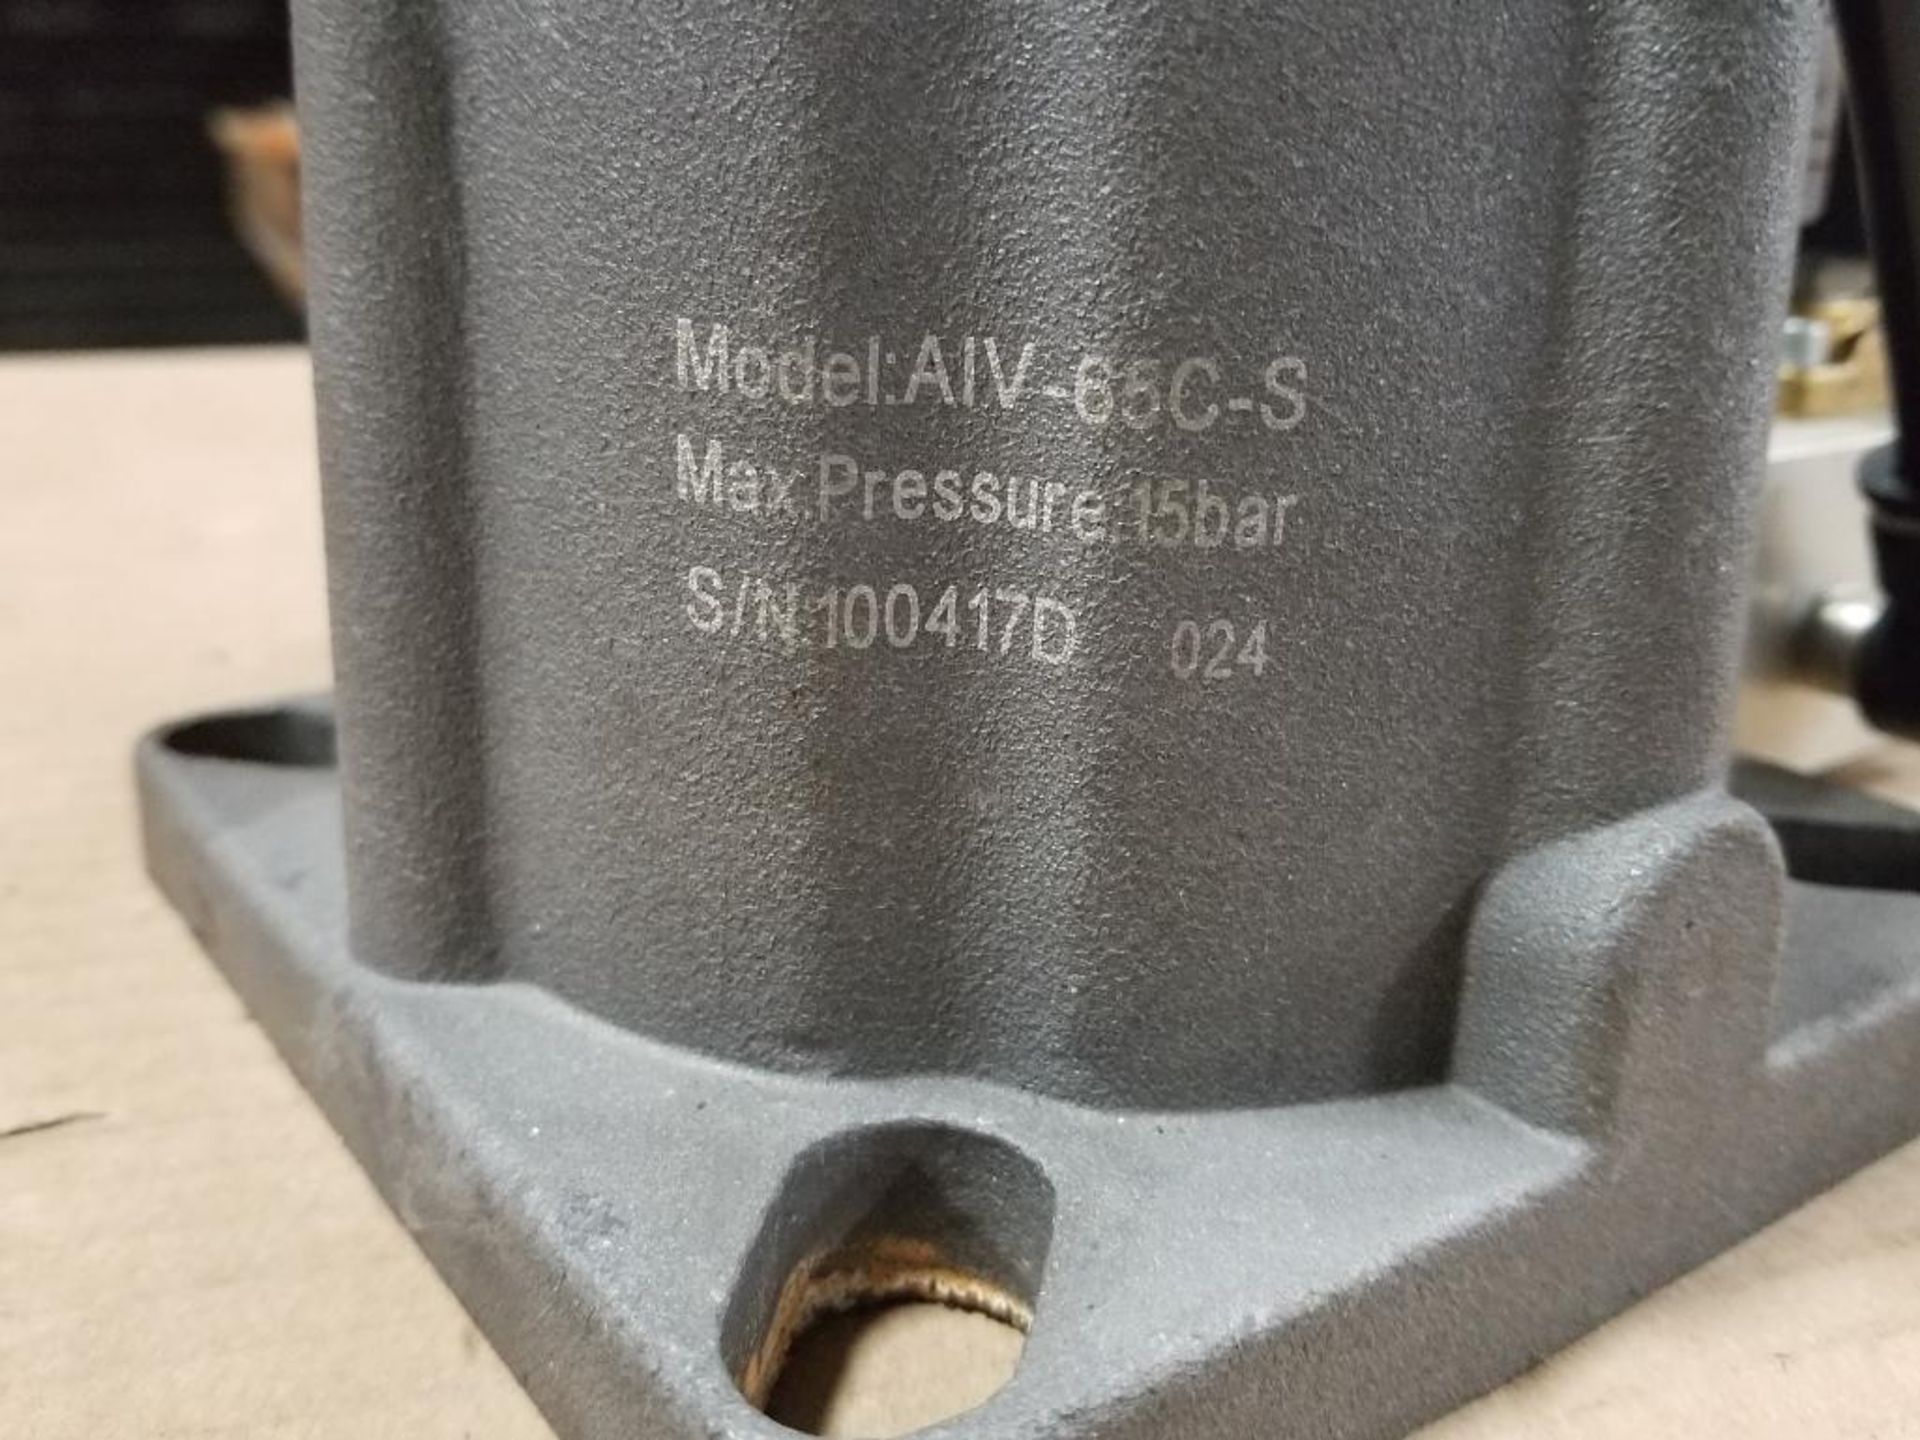 AIV-65C-S Intake valve. Max pressure - 15BAR. New no box. - Image 4 of 8